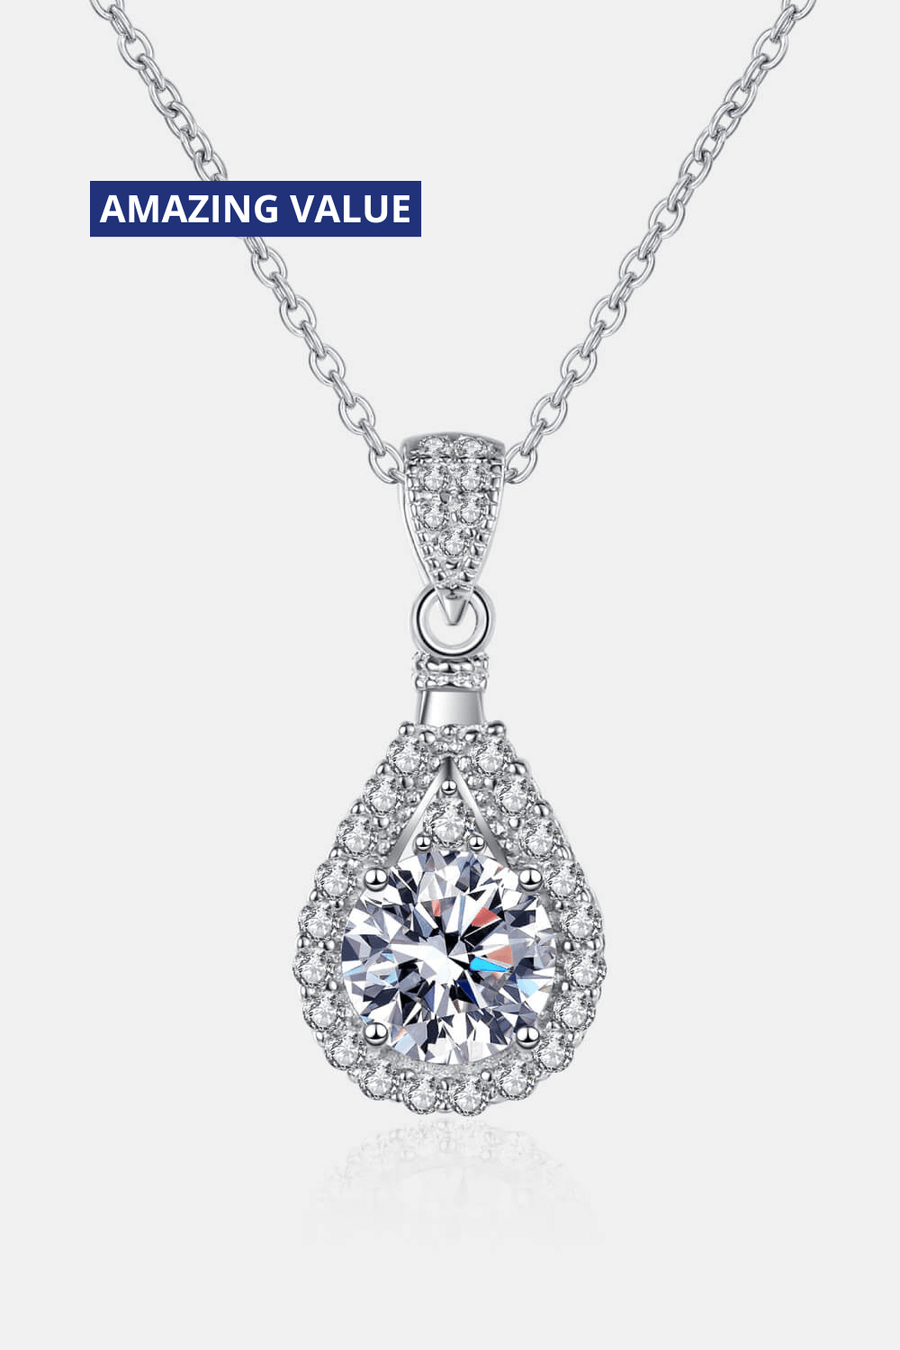 1# BEST Diamond Pendant Necklace Jewelry Gifts for Women | #1 Best Most Top Trendy Trending 1 Carat Diamond Teardrop Pendant Necklace Gift for Women, Ladies | MASON New York